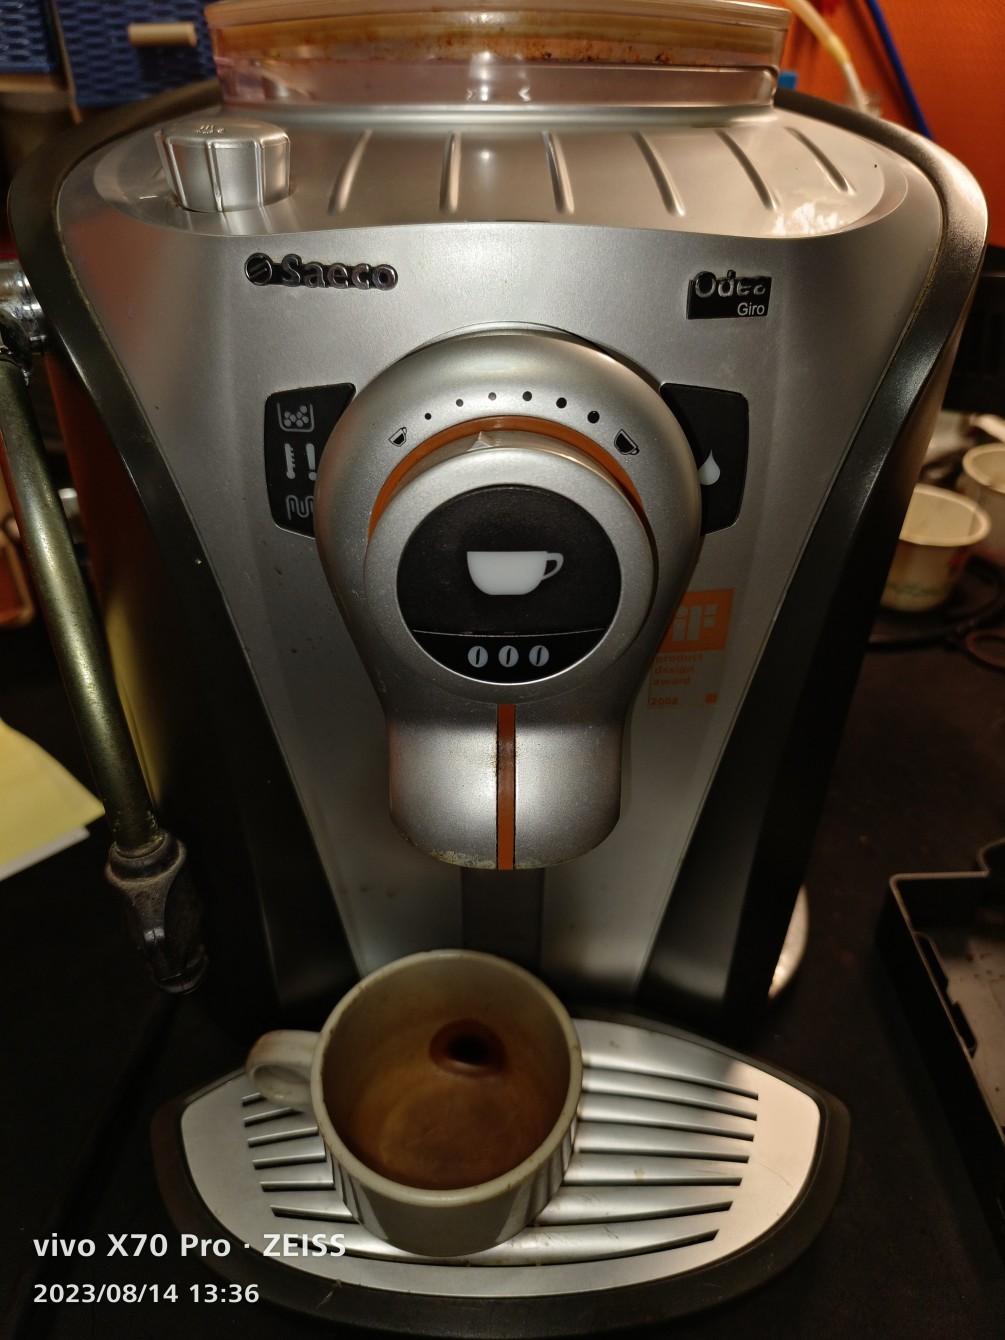 saeco-odea -全自動咖啡機-墊圈毀損漏水-更新-大保養清潔處理